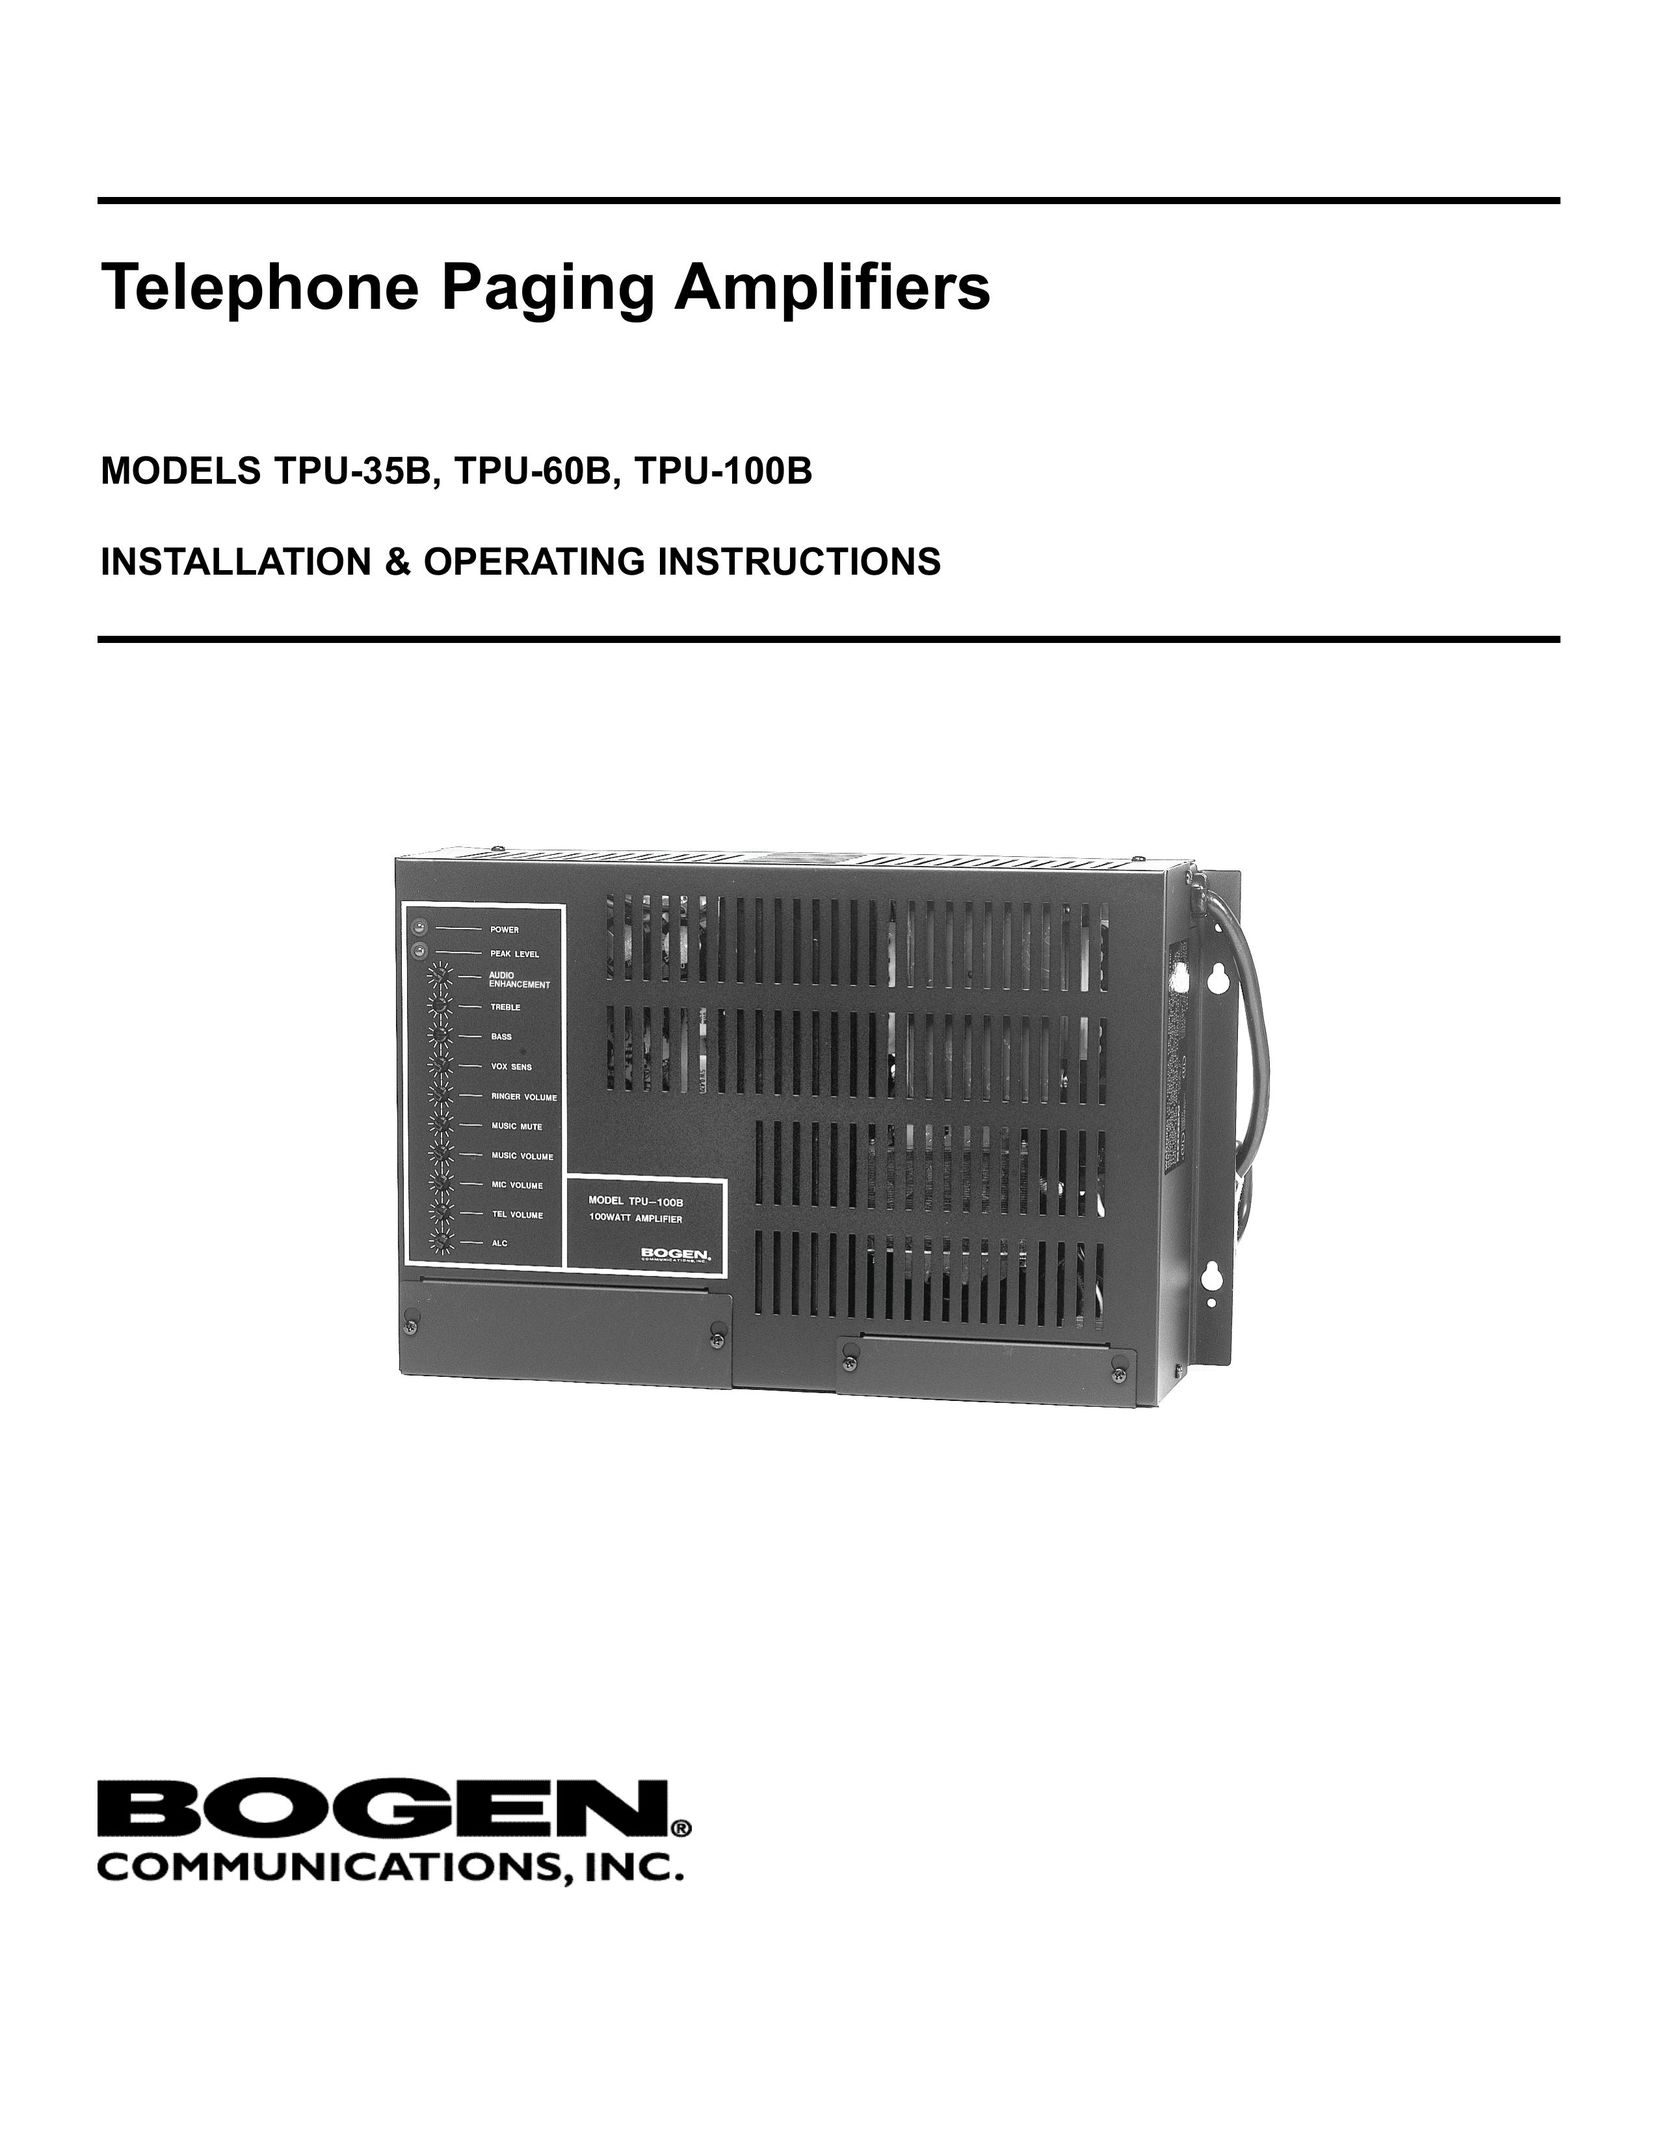 Bogen TPU-35B Amplified Phone User Manual (Page 1)